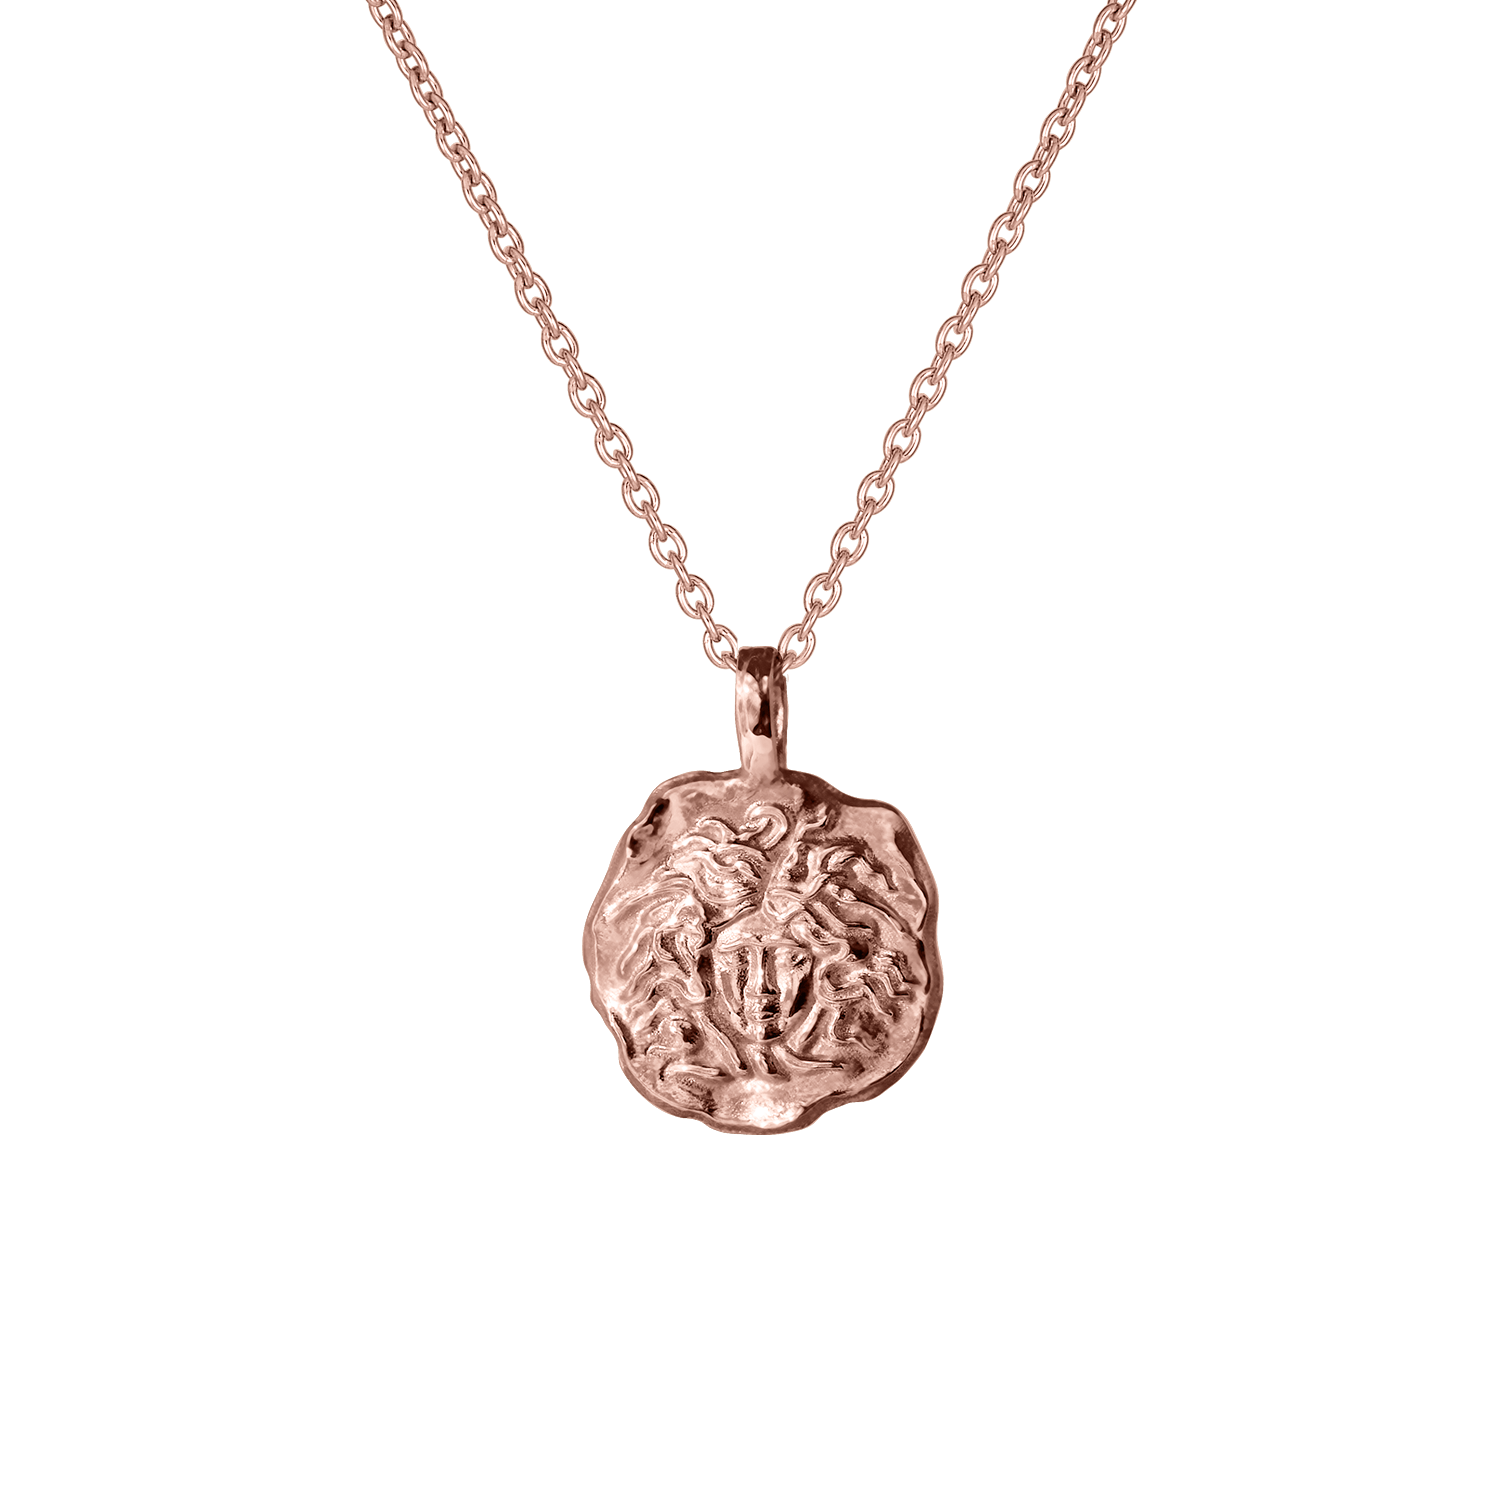 3D Micro Pave Charm Gold Filled Medallion, Lion Medallion, Lion Pendant,  Lion Jewelry, Lion Necklace Charm for Statement Necklace Component I-583